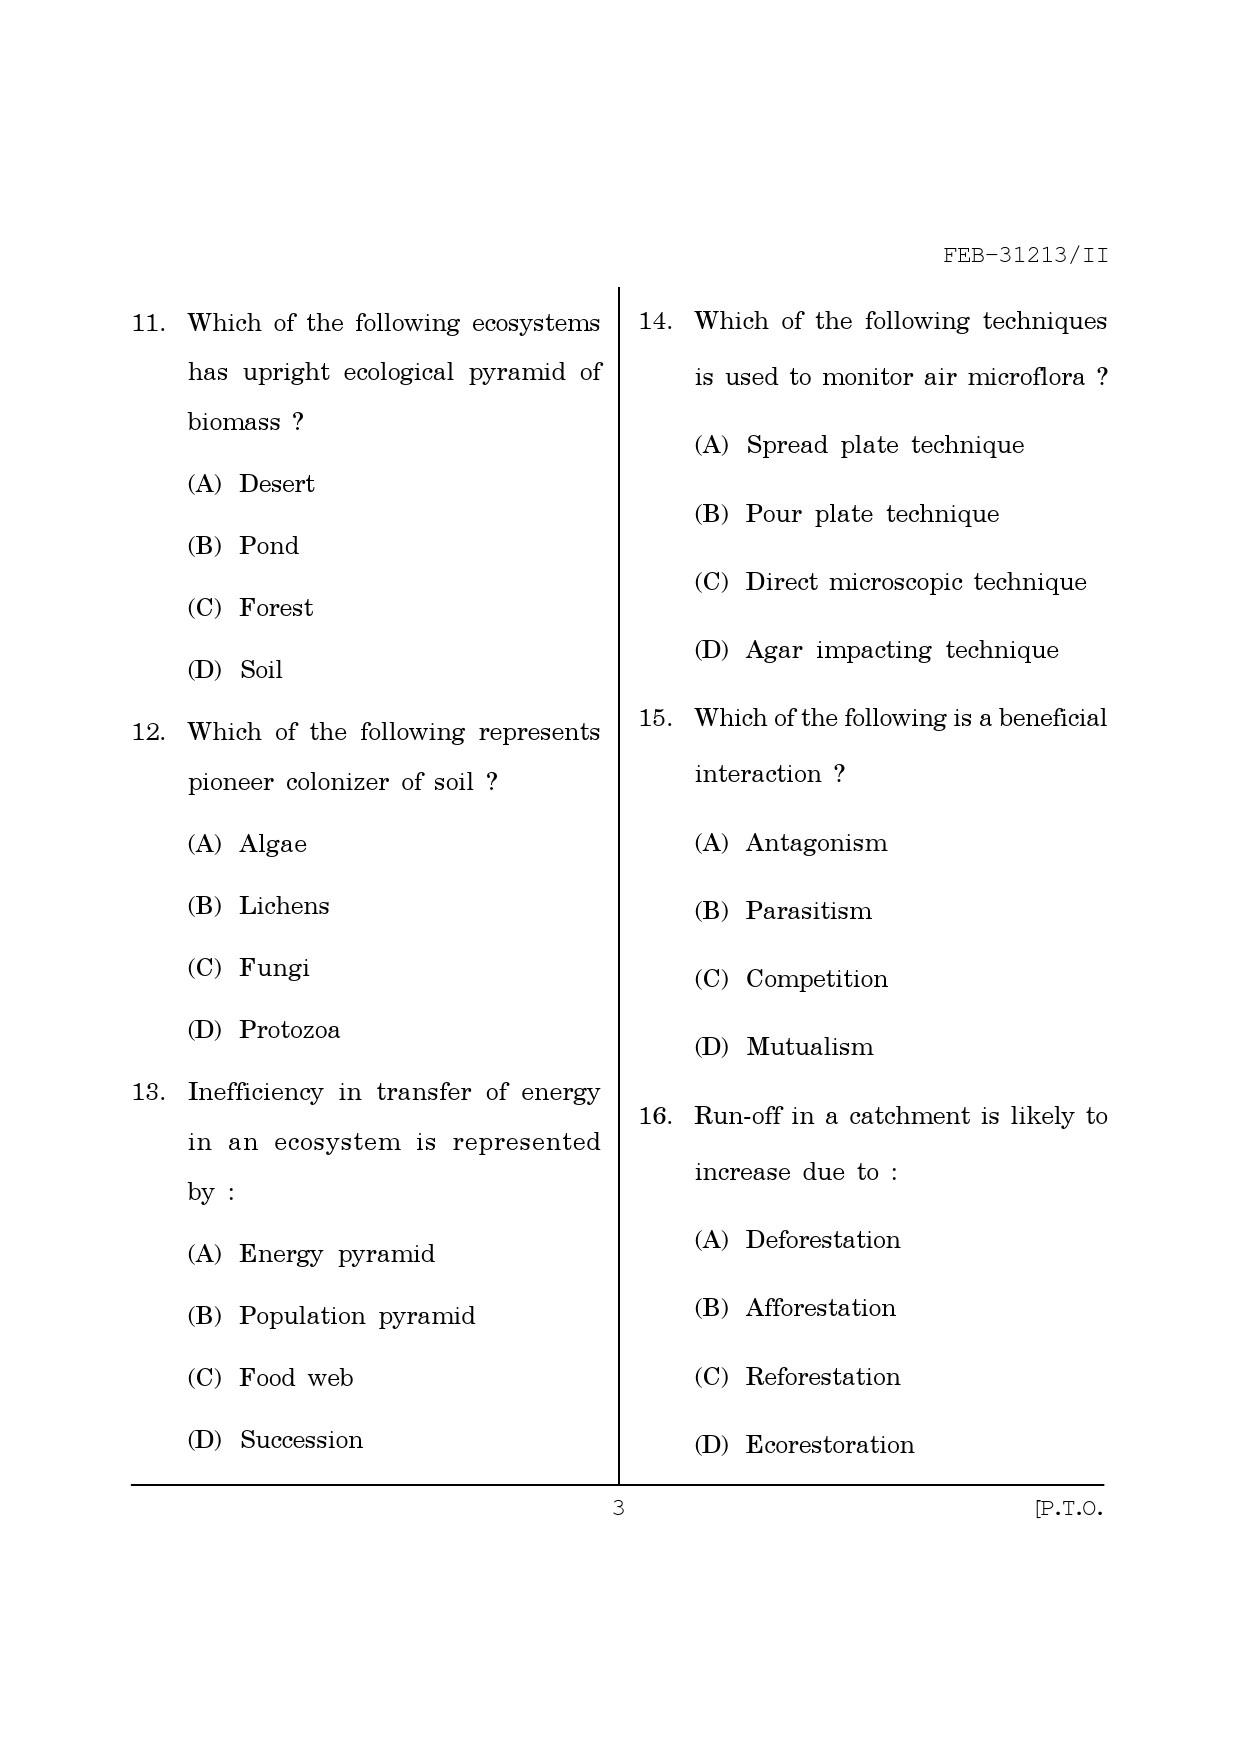 Maharashtra SET Environmental Sciences Question Paper II February 2013 3